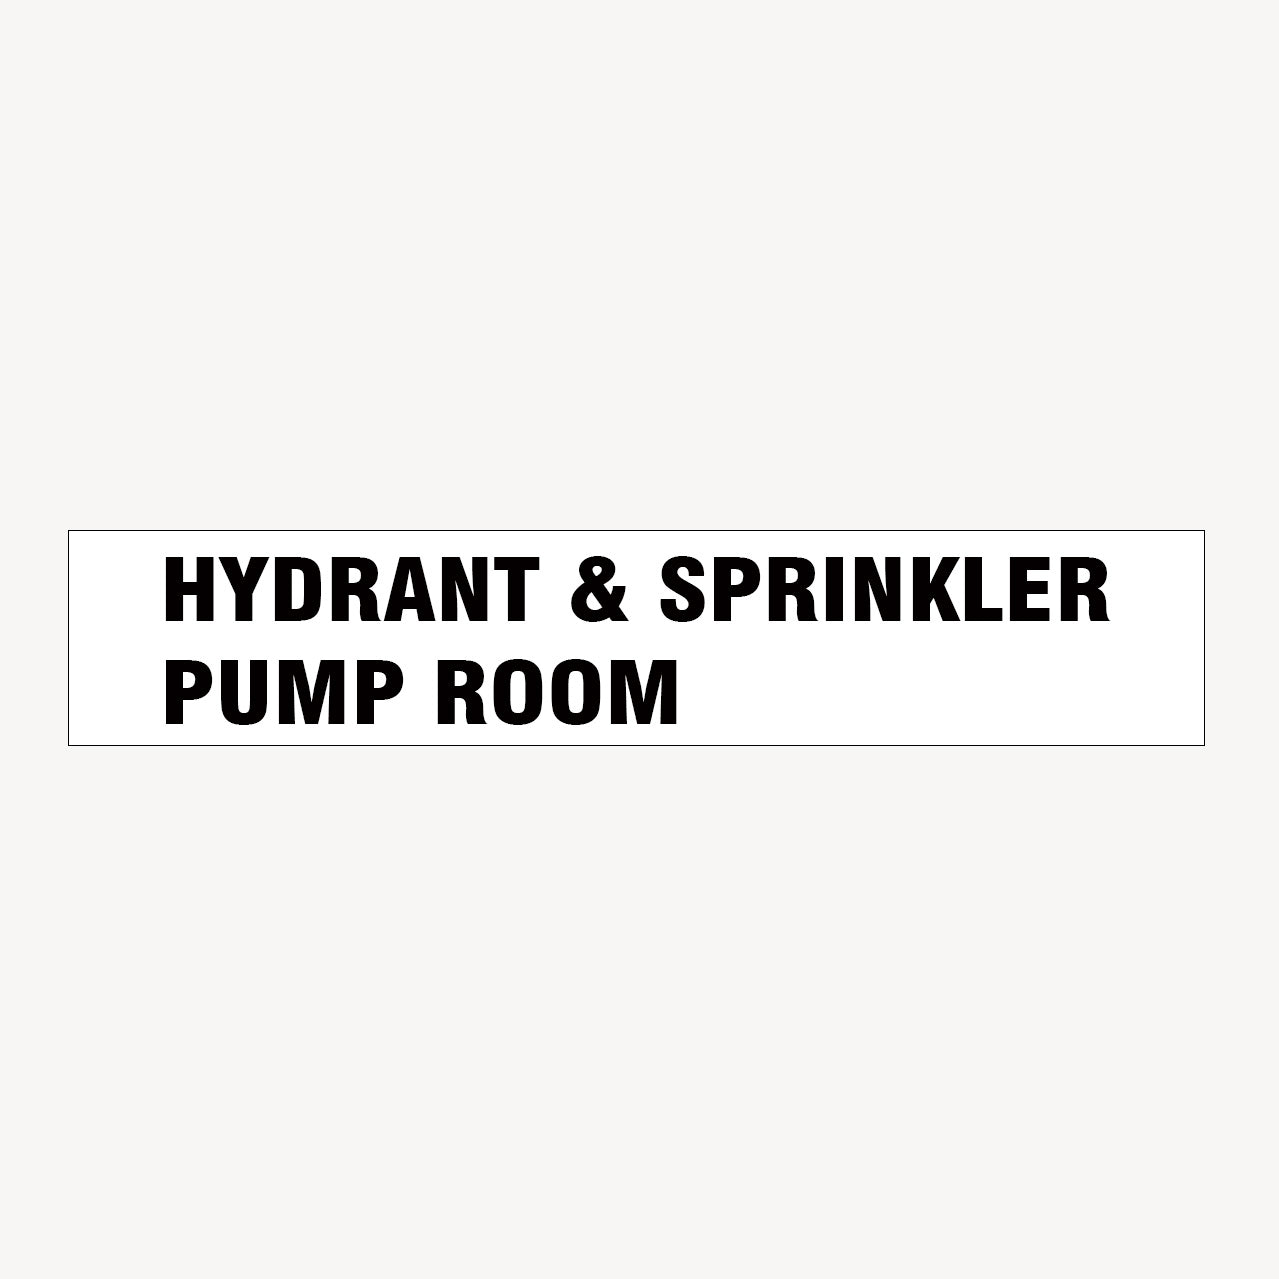 HYDRANT & SPRINKLER PUMP ROOM SIGN - statutory signs at Get Signs